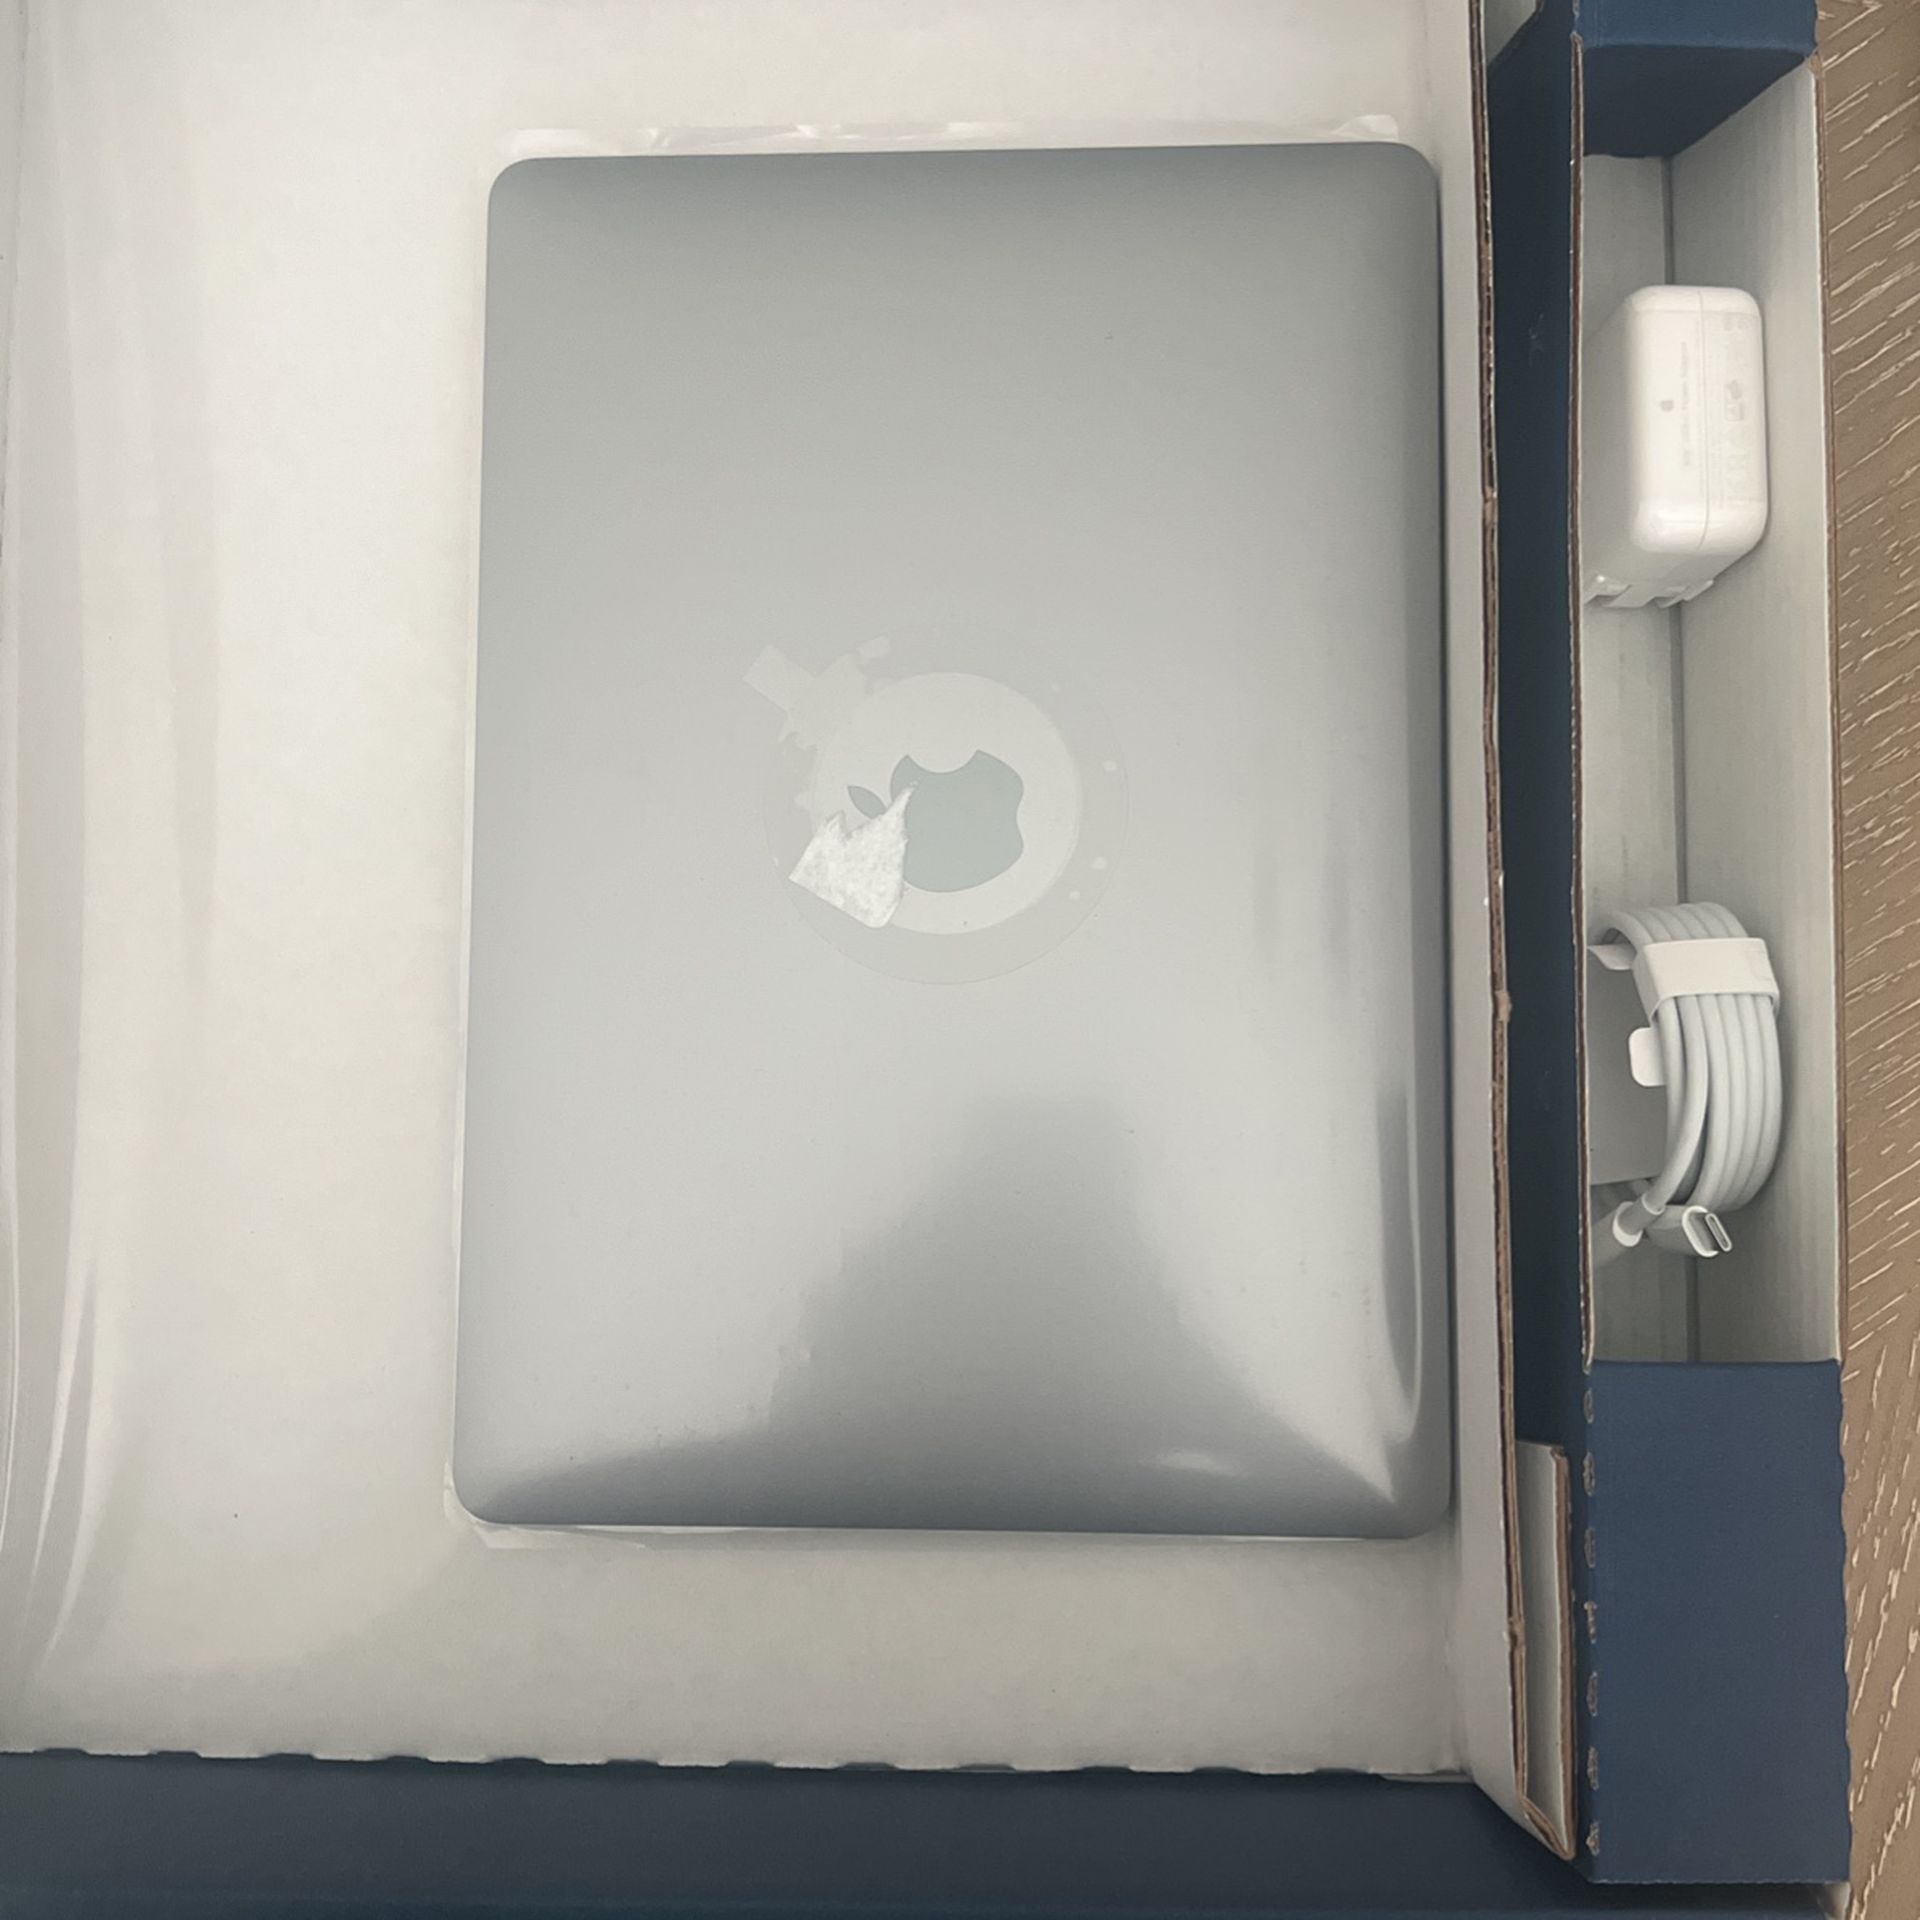 MacBook Air 13.3" Laptop - Apple M1 chip - 8GB Memory - 256GB SSD - Space Gray